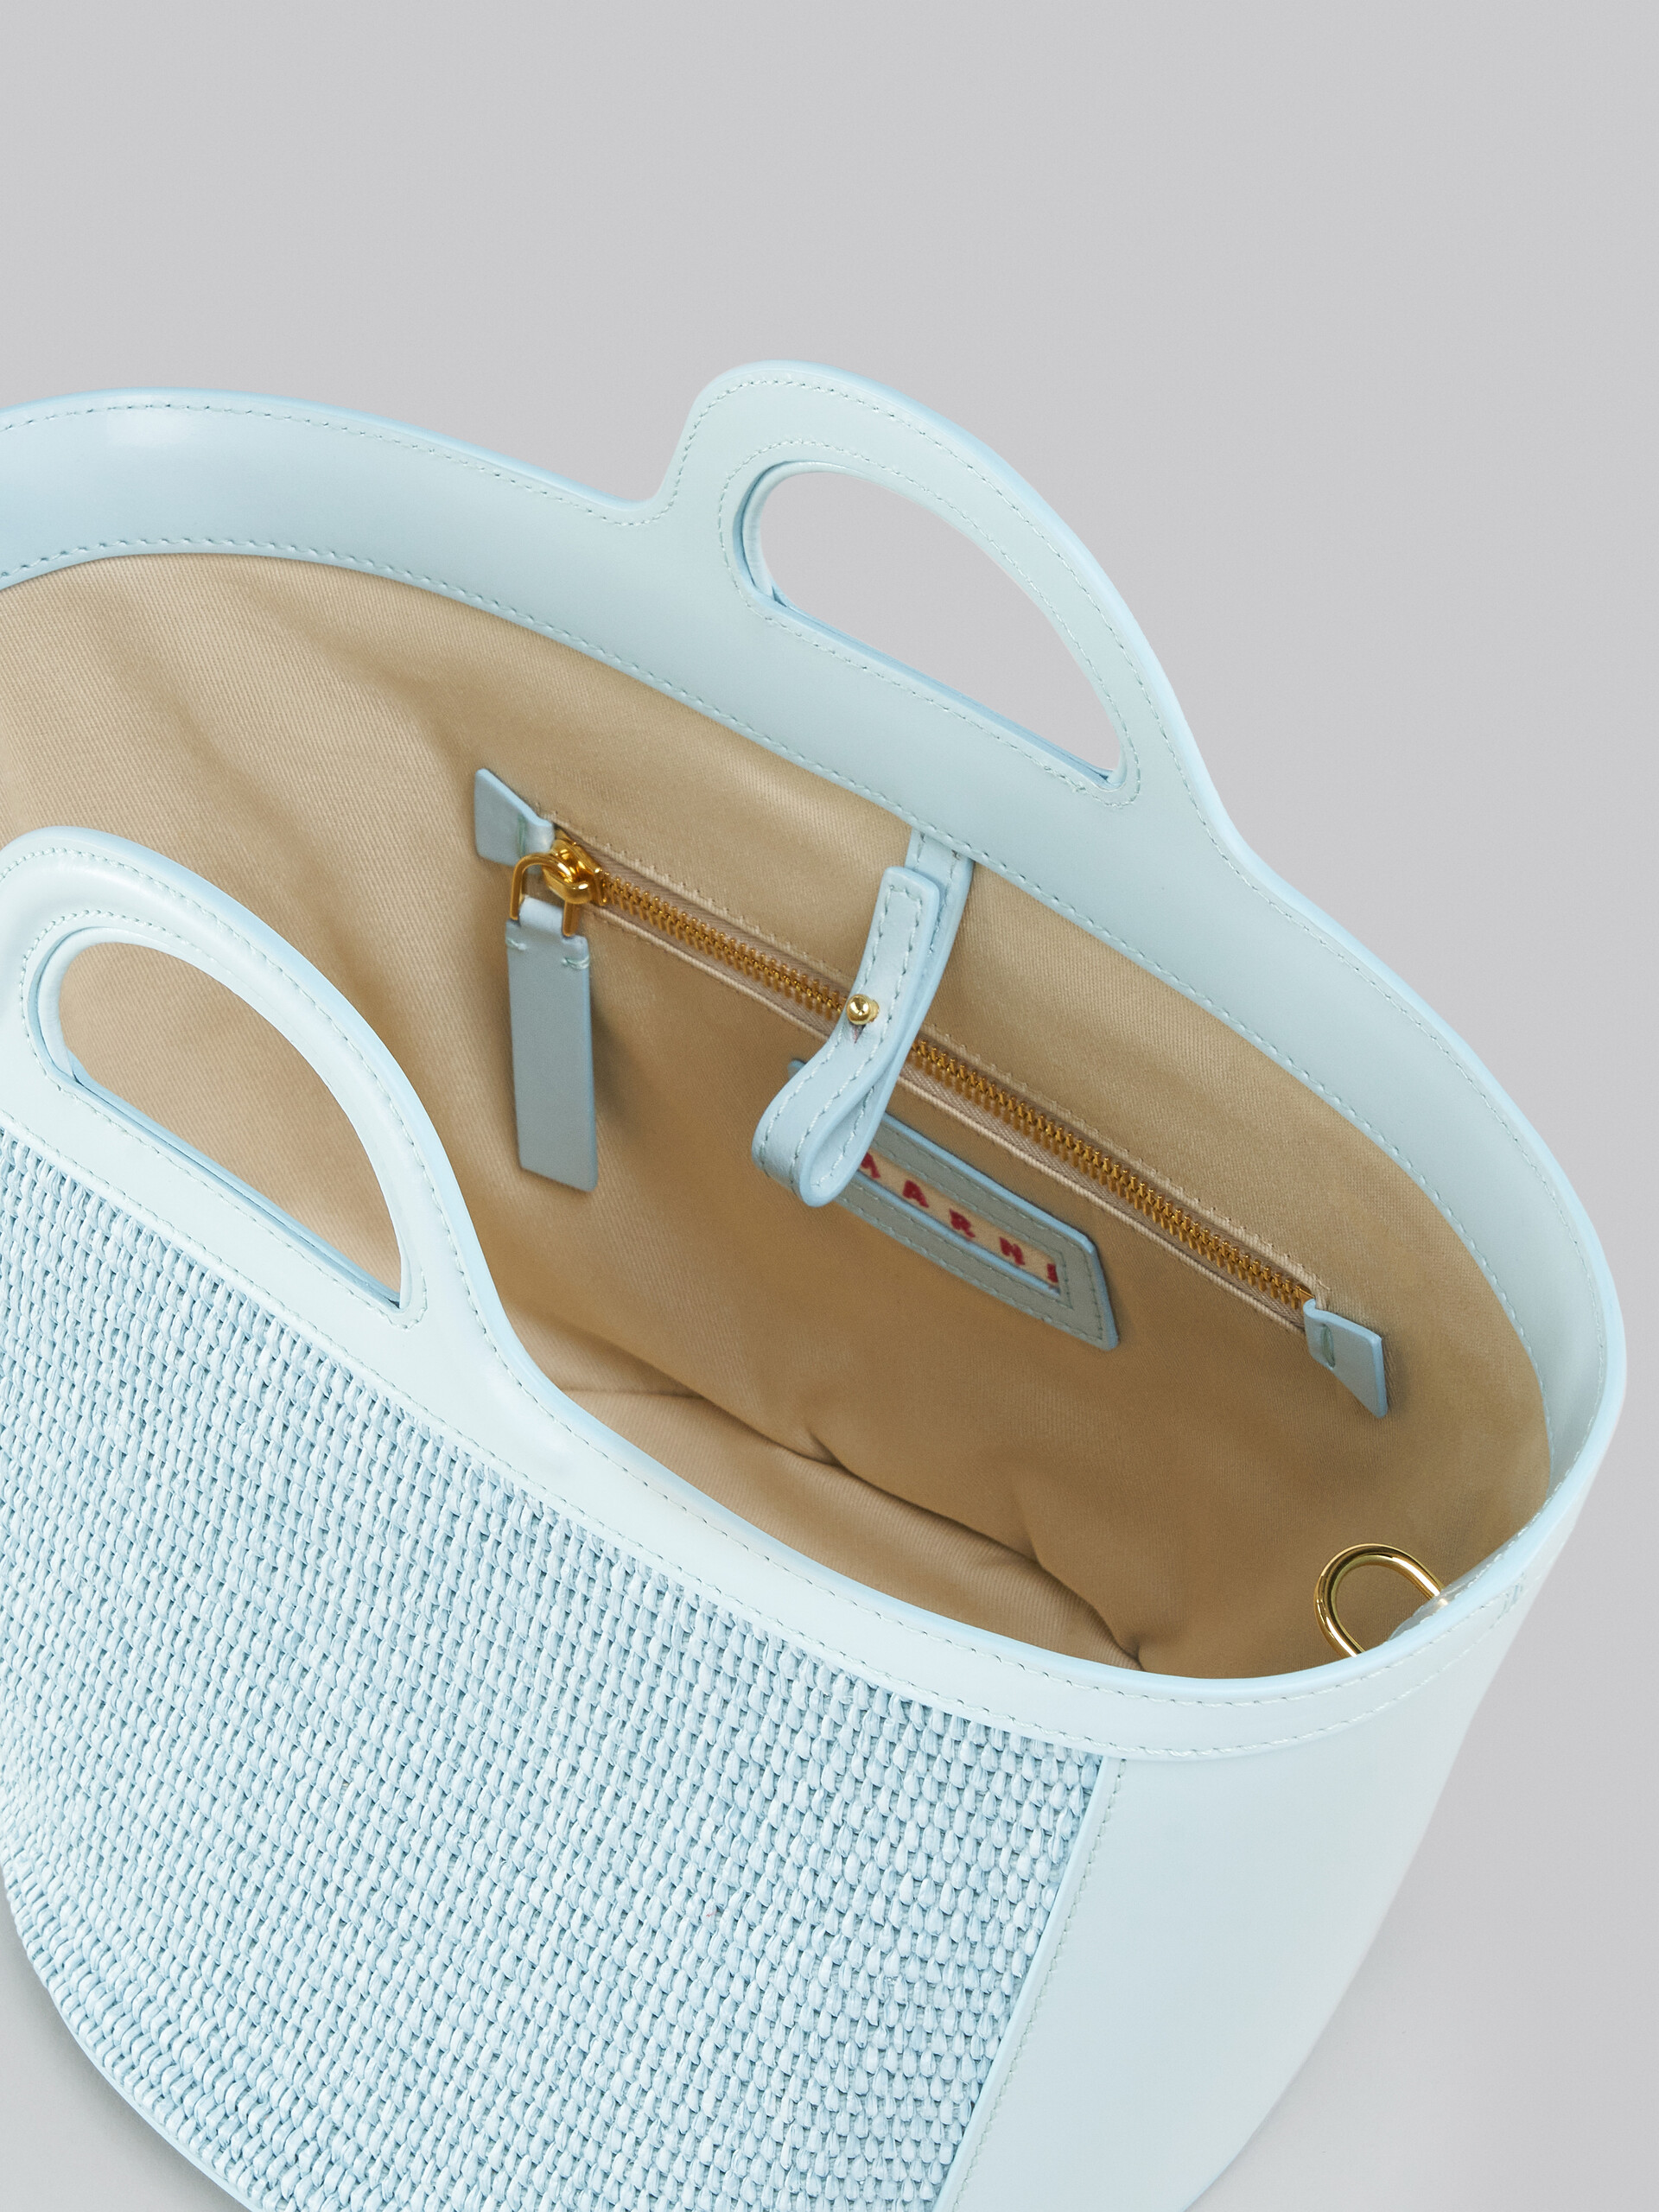 Tropicalia Small Bag in light blue leather and raffia - Handbag - Image 4